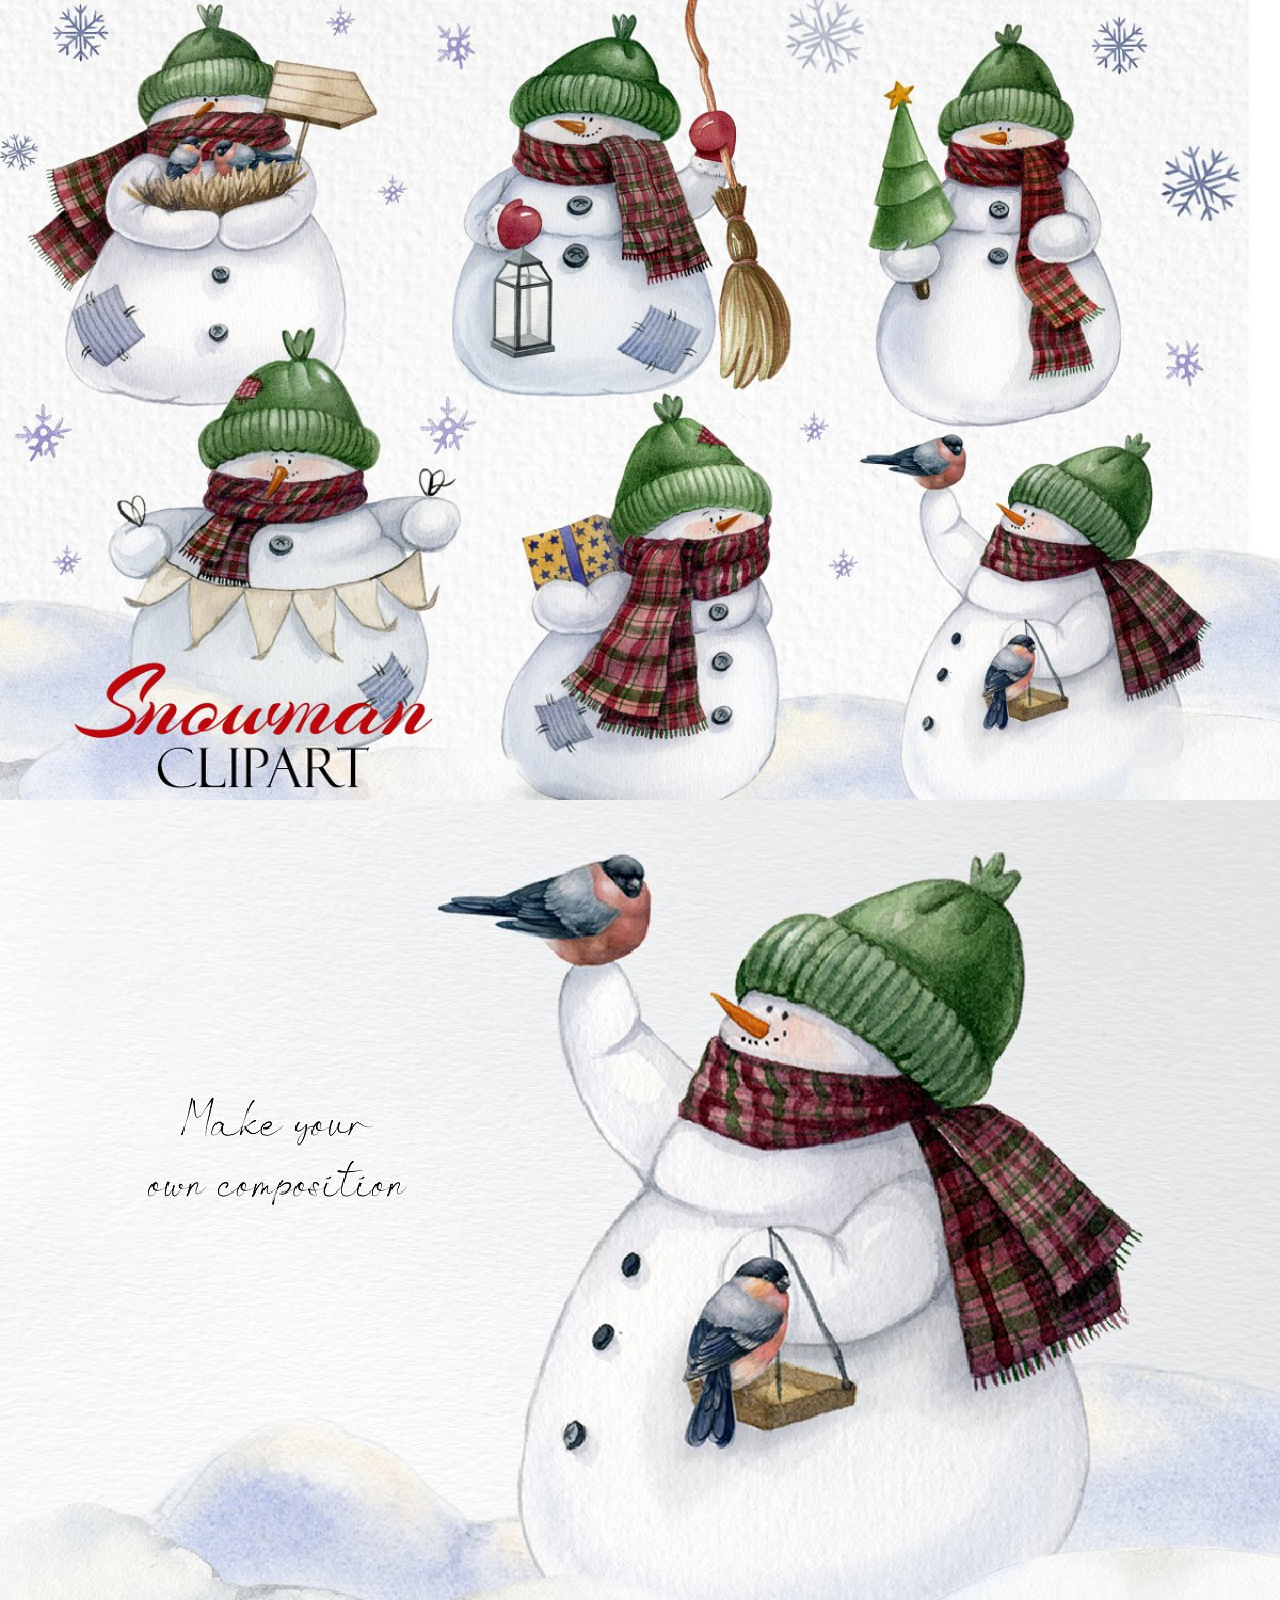 Watercolor christmas snowman clipart pinterest image preview.